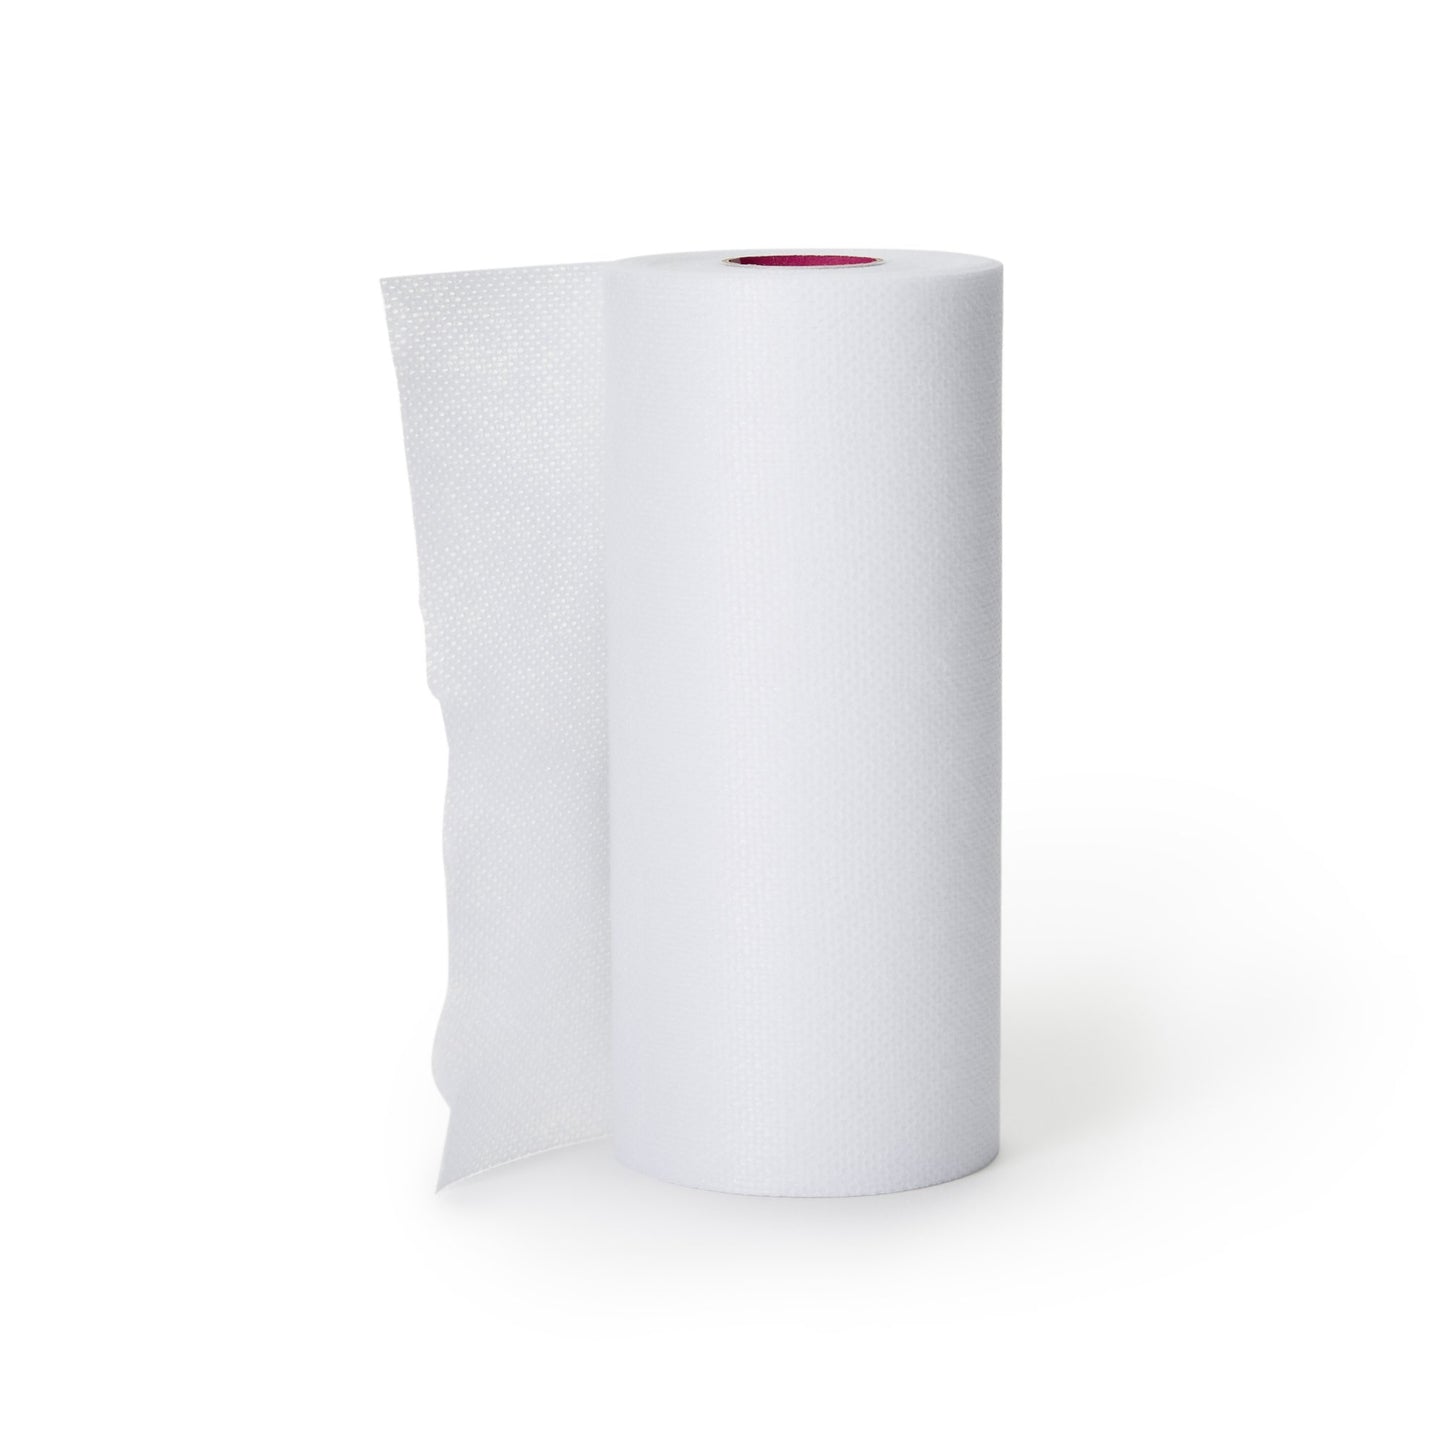 3M™ Medipore™ H Cloth Medical Tape, 6 Inch x 10 Yard, White